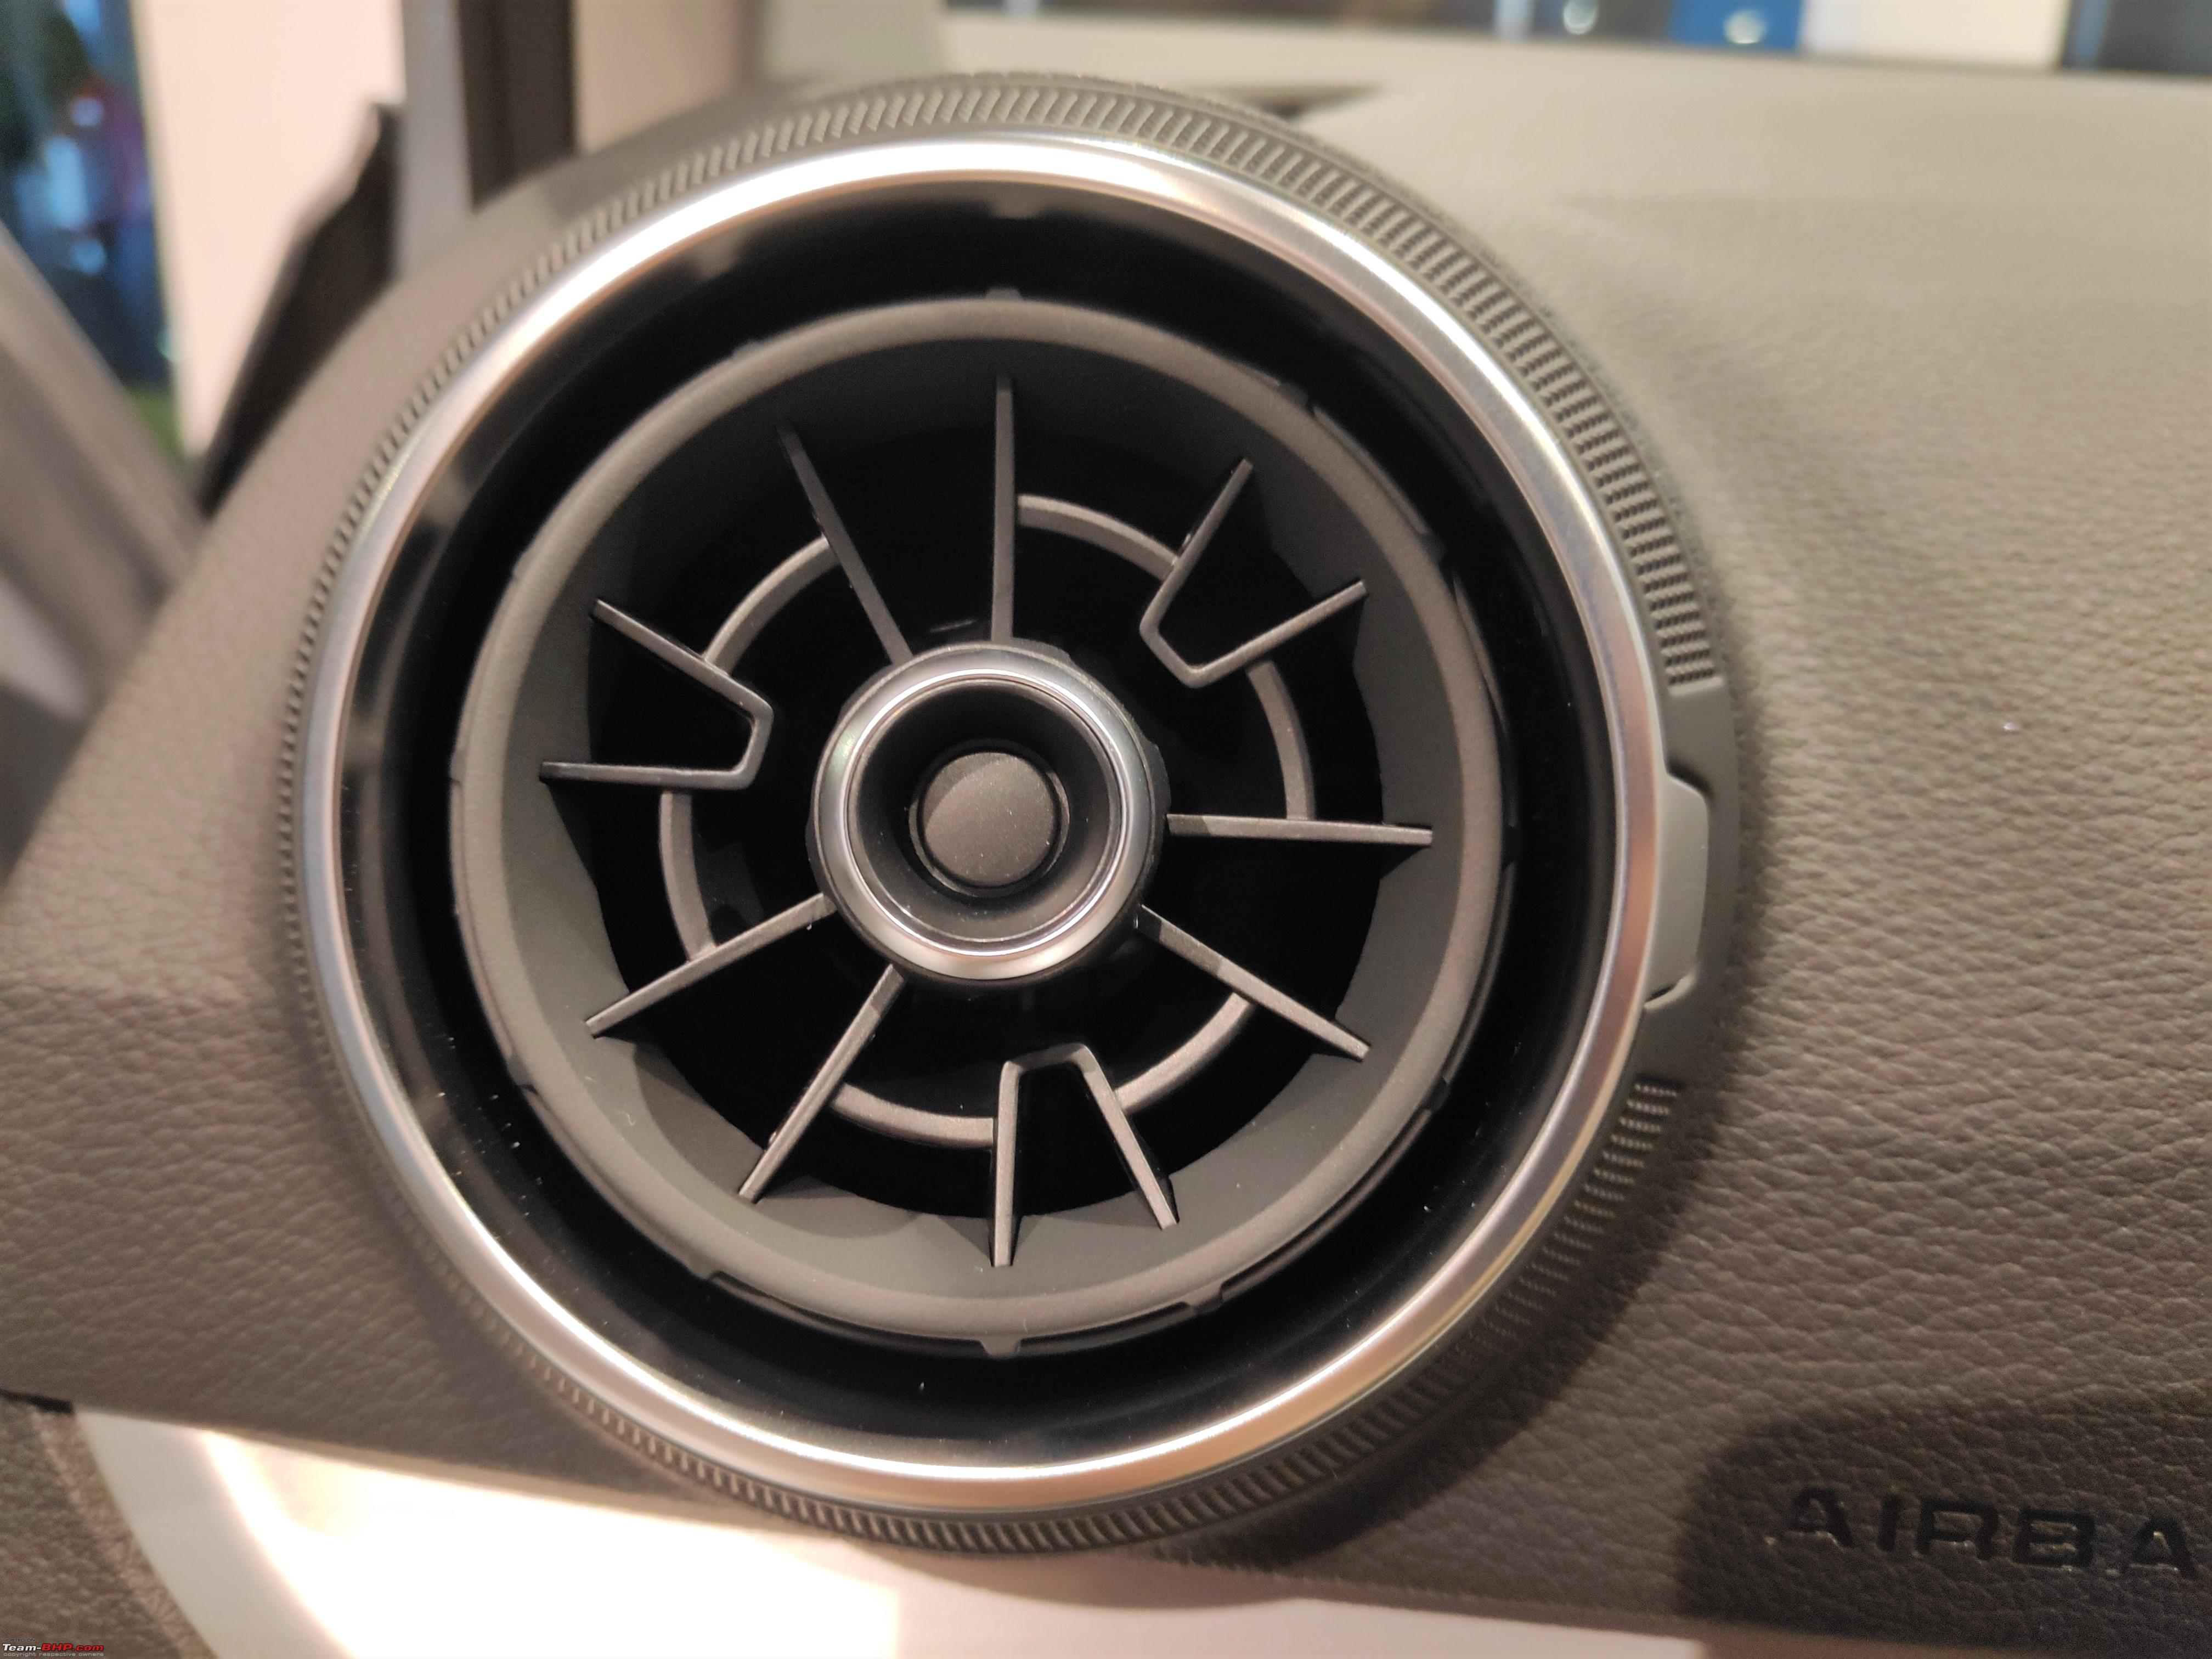 Driven - Audi Q2! Unveiling & Review - Team-BHP